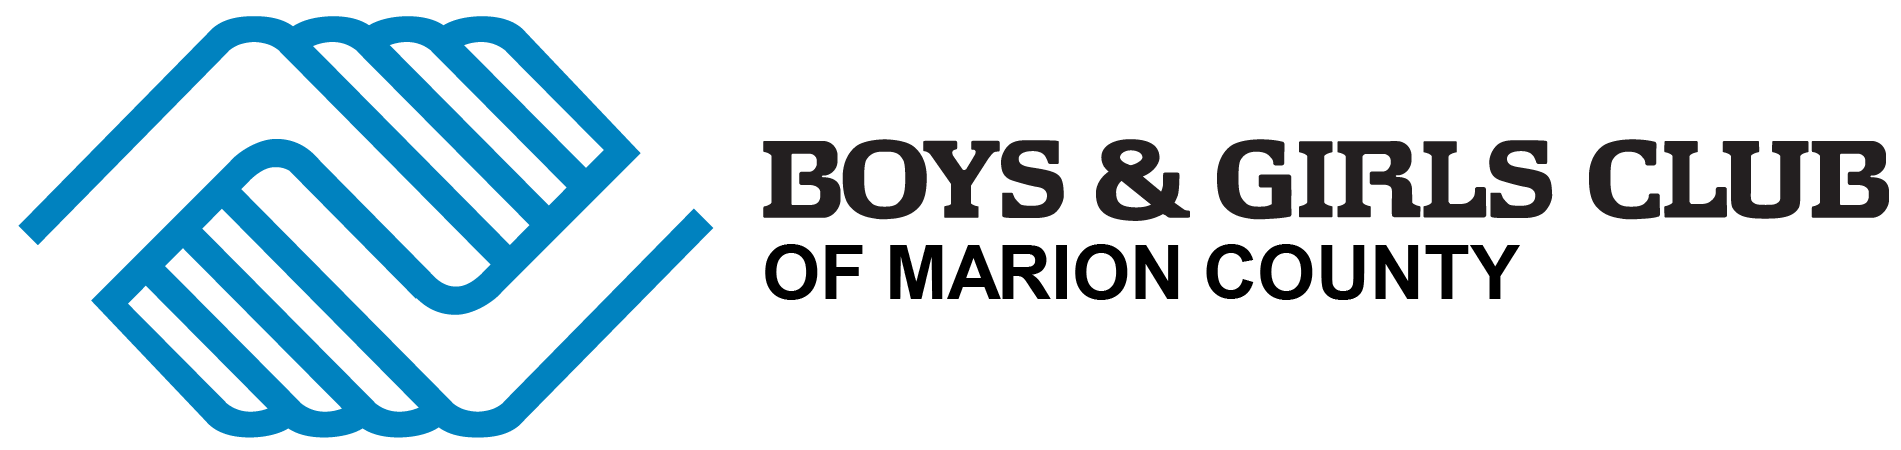 Boys and Girls Club Logo - Meet Our Staff - Boys & Girls Club of Marion County